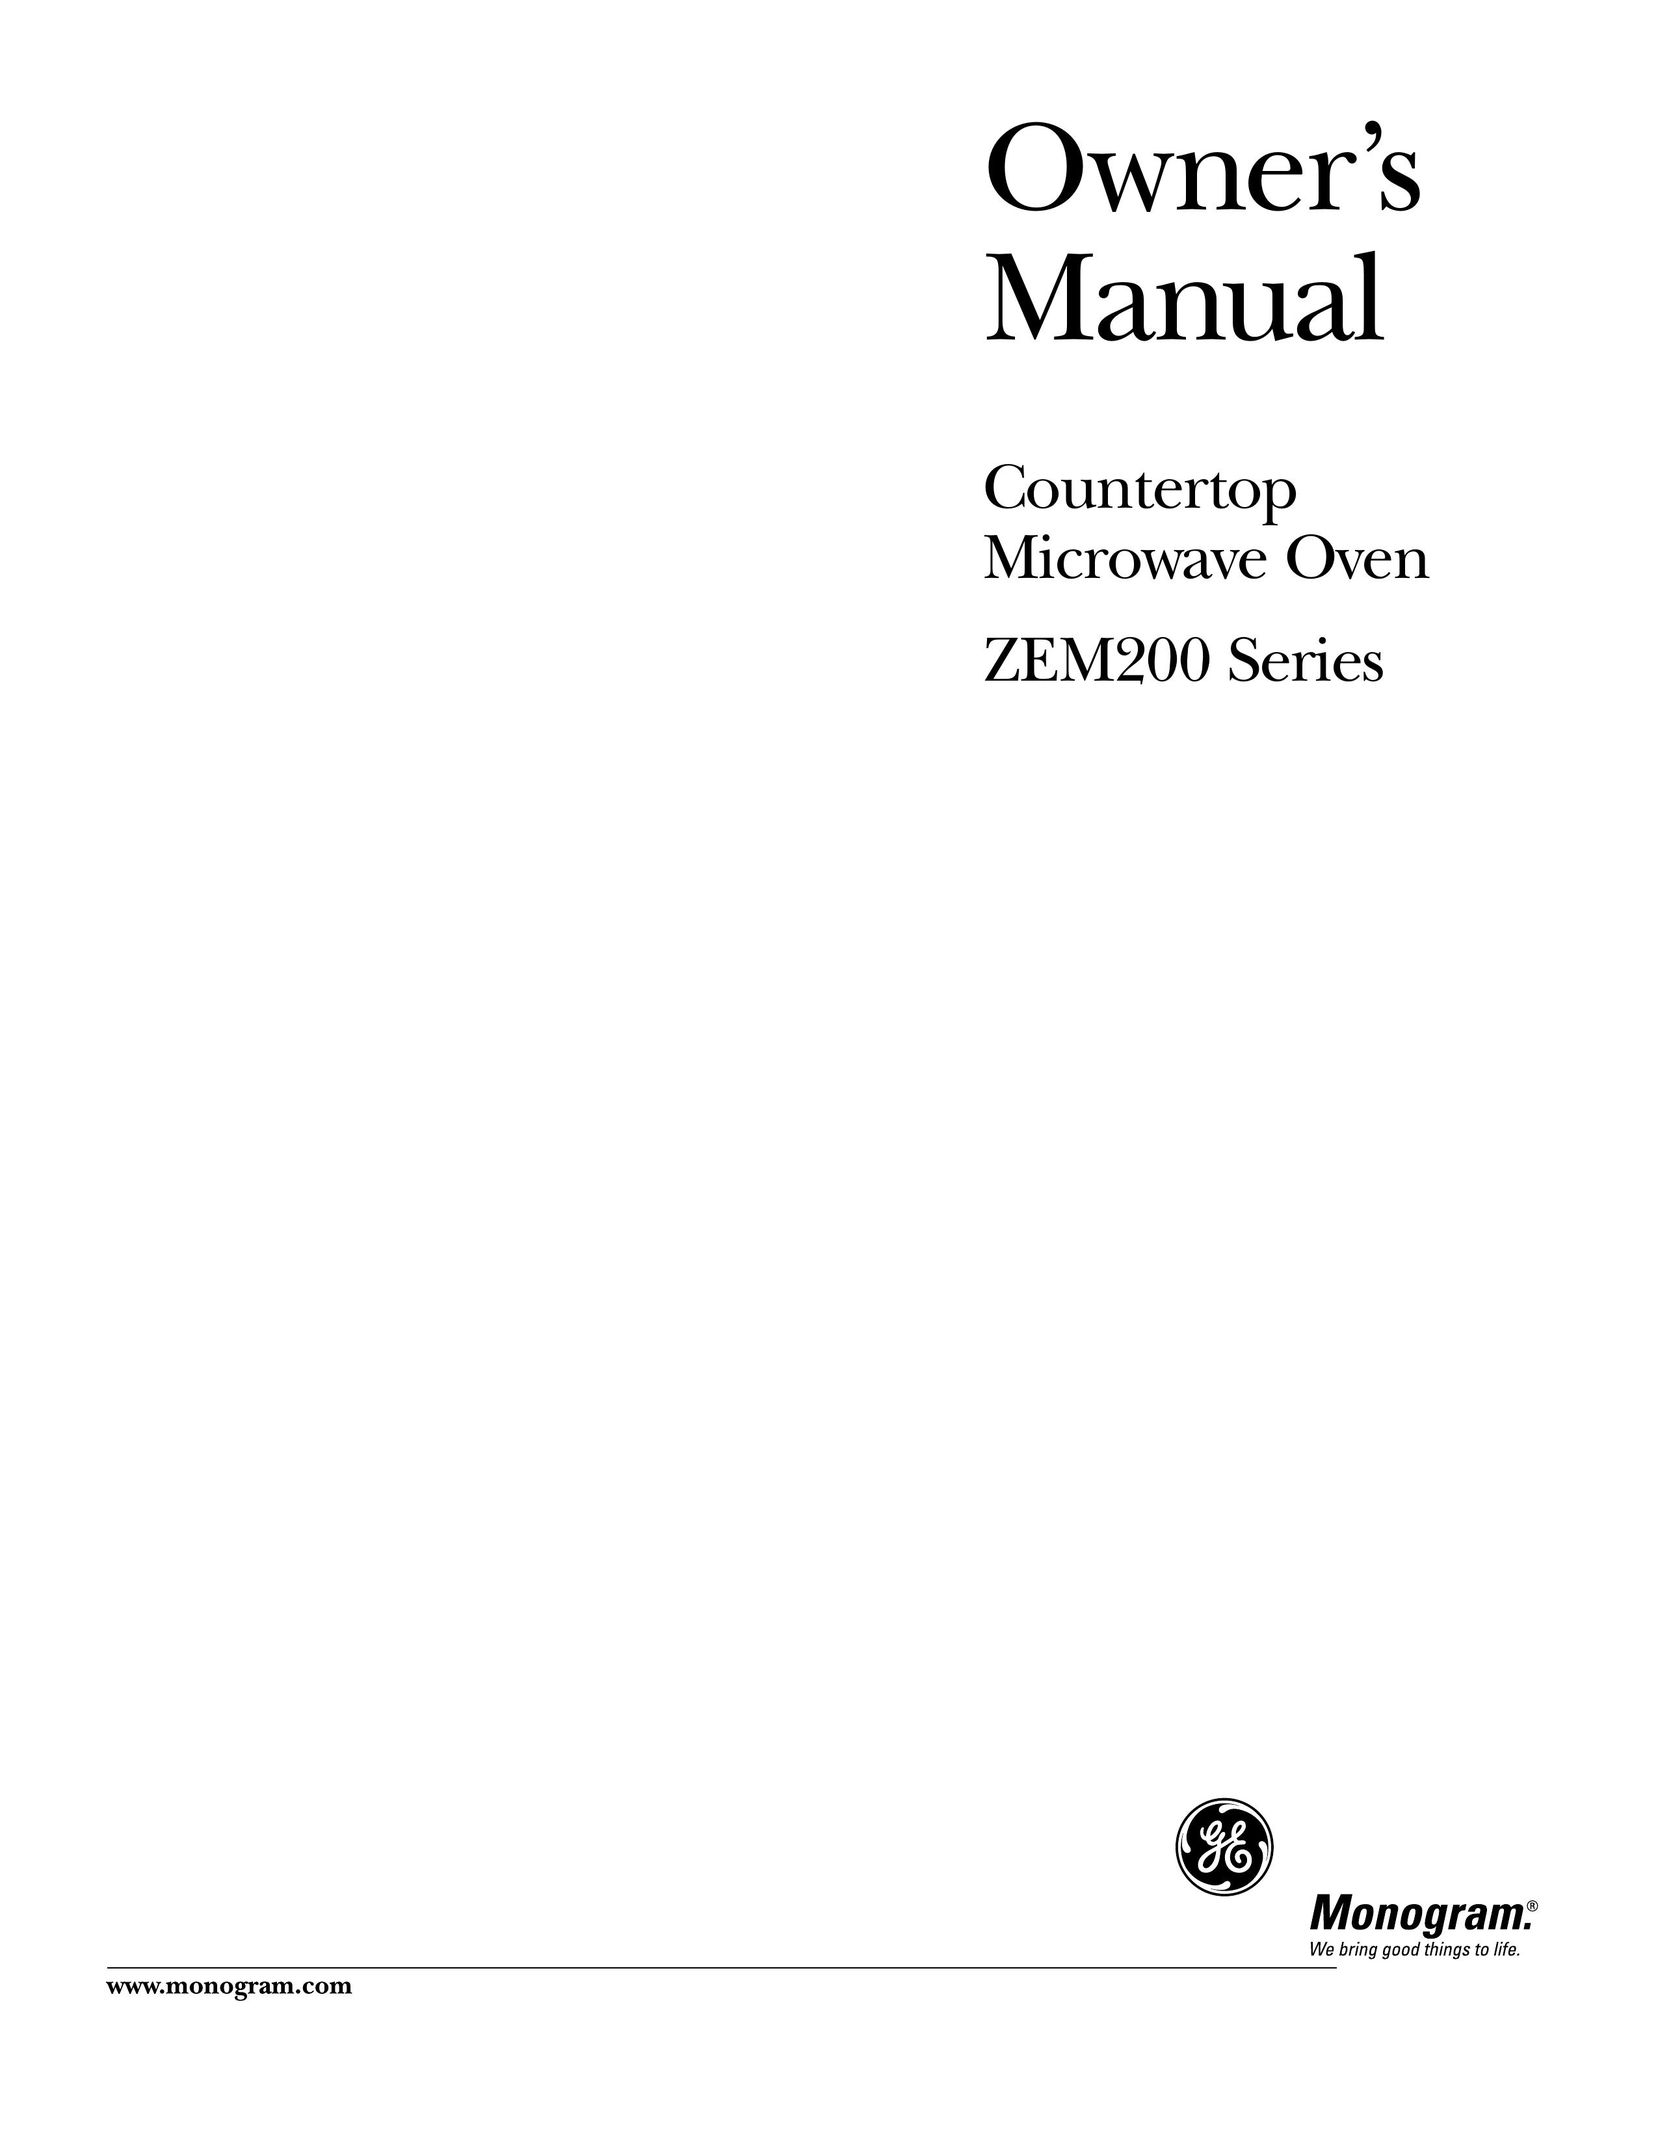 GE Monogram ZEM200 Microwave Oven User Manual